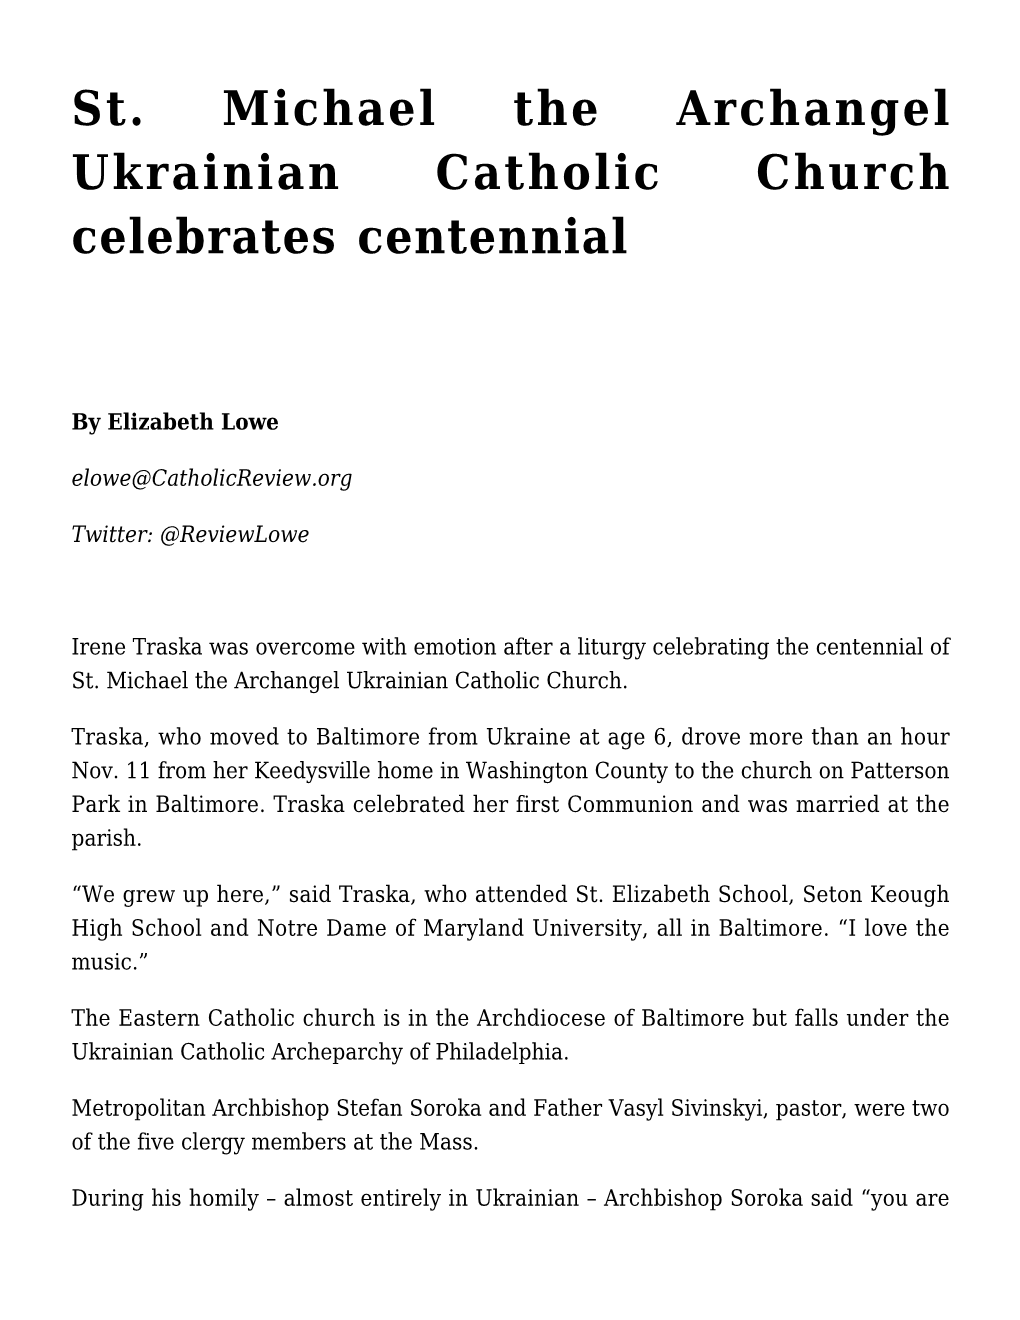 St. Michael the Archangel Ukrainian Catholic Church Celebrates Centennial